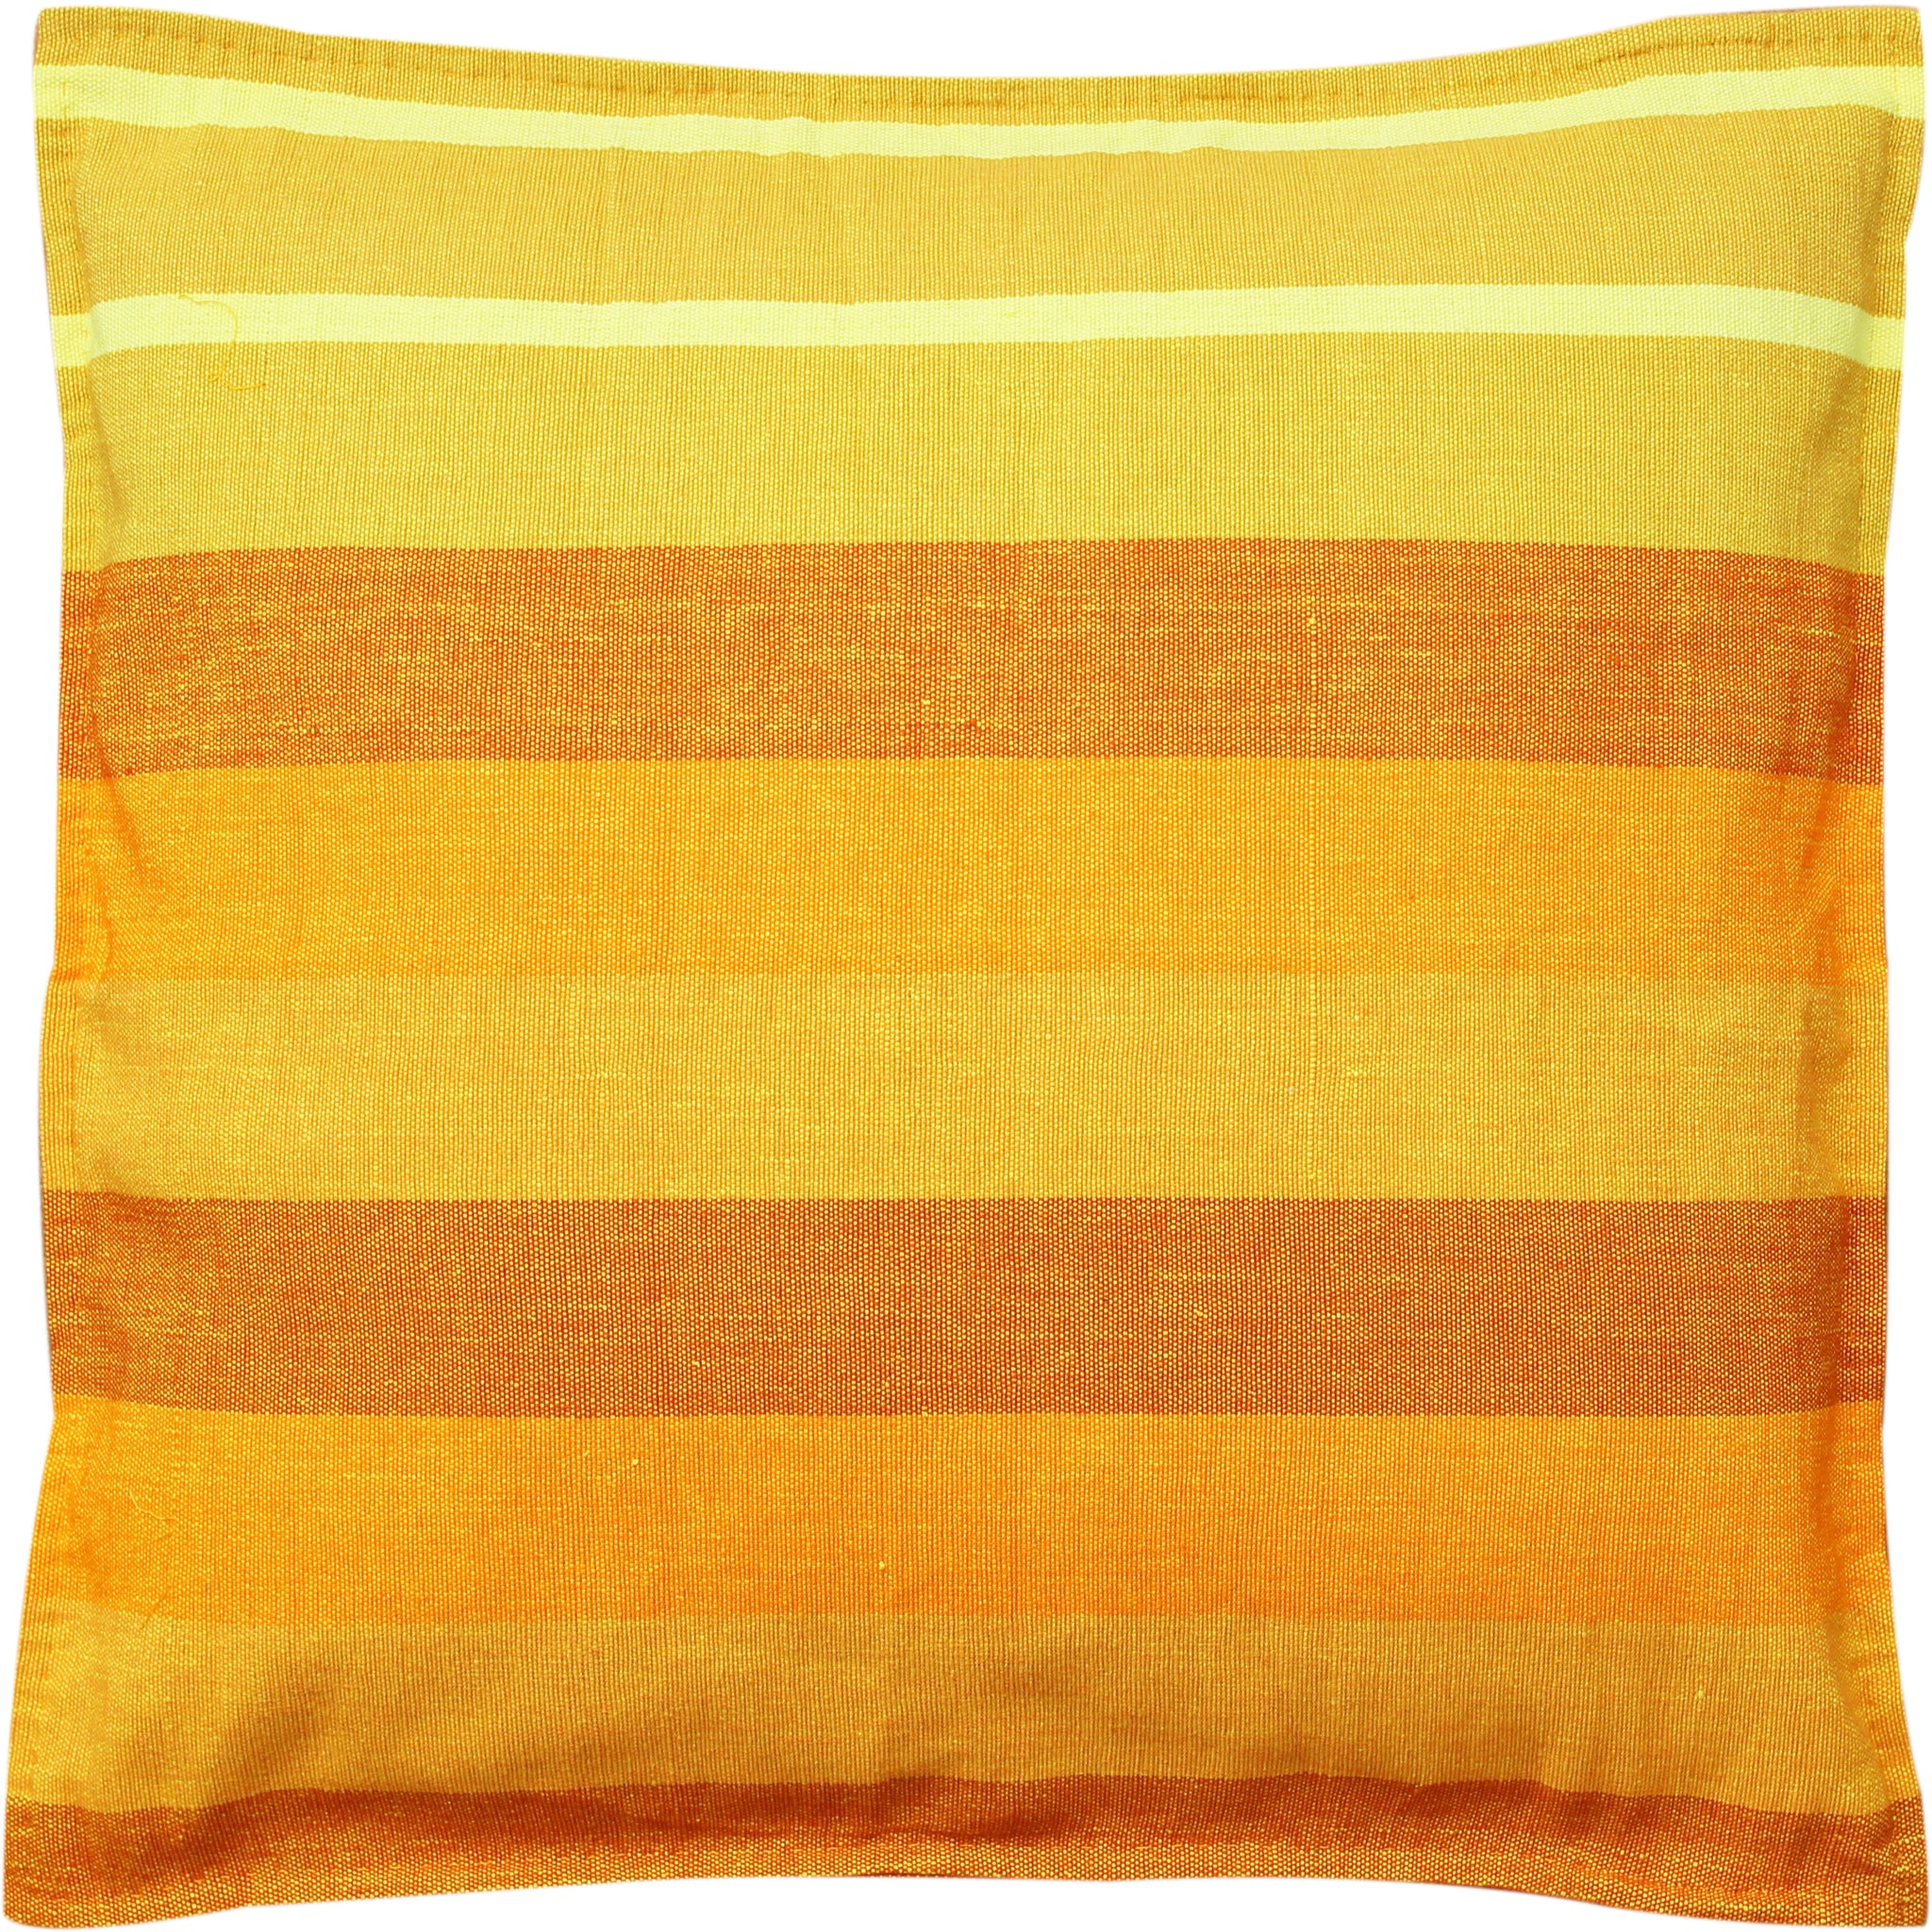 Barefoot handloom cushion cover - sunrise